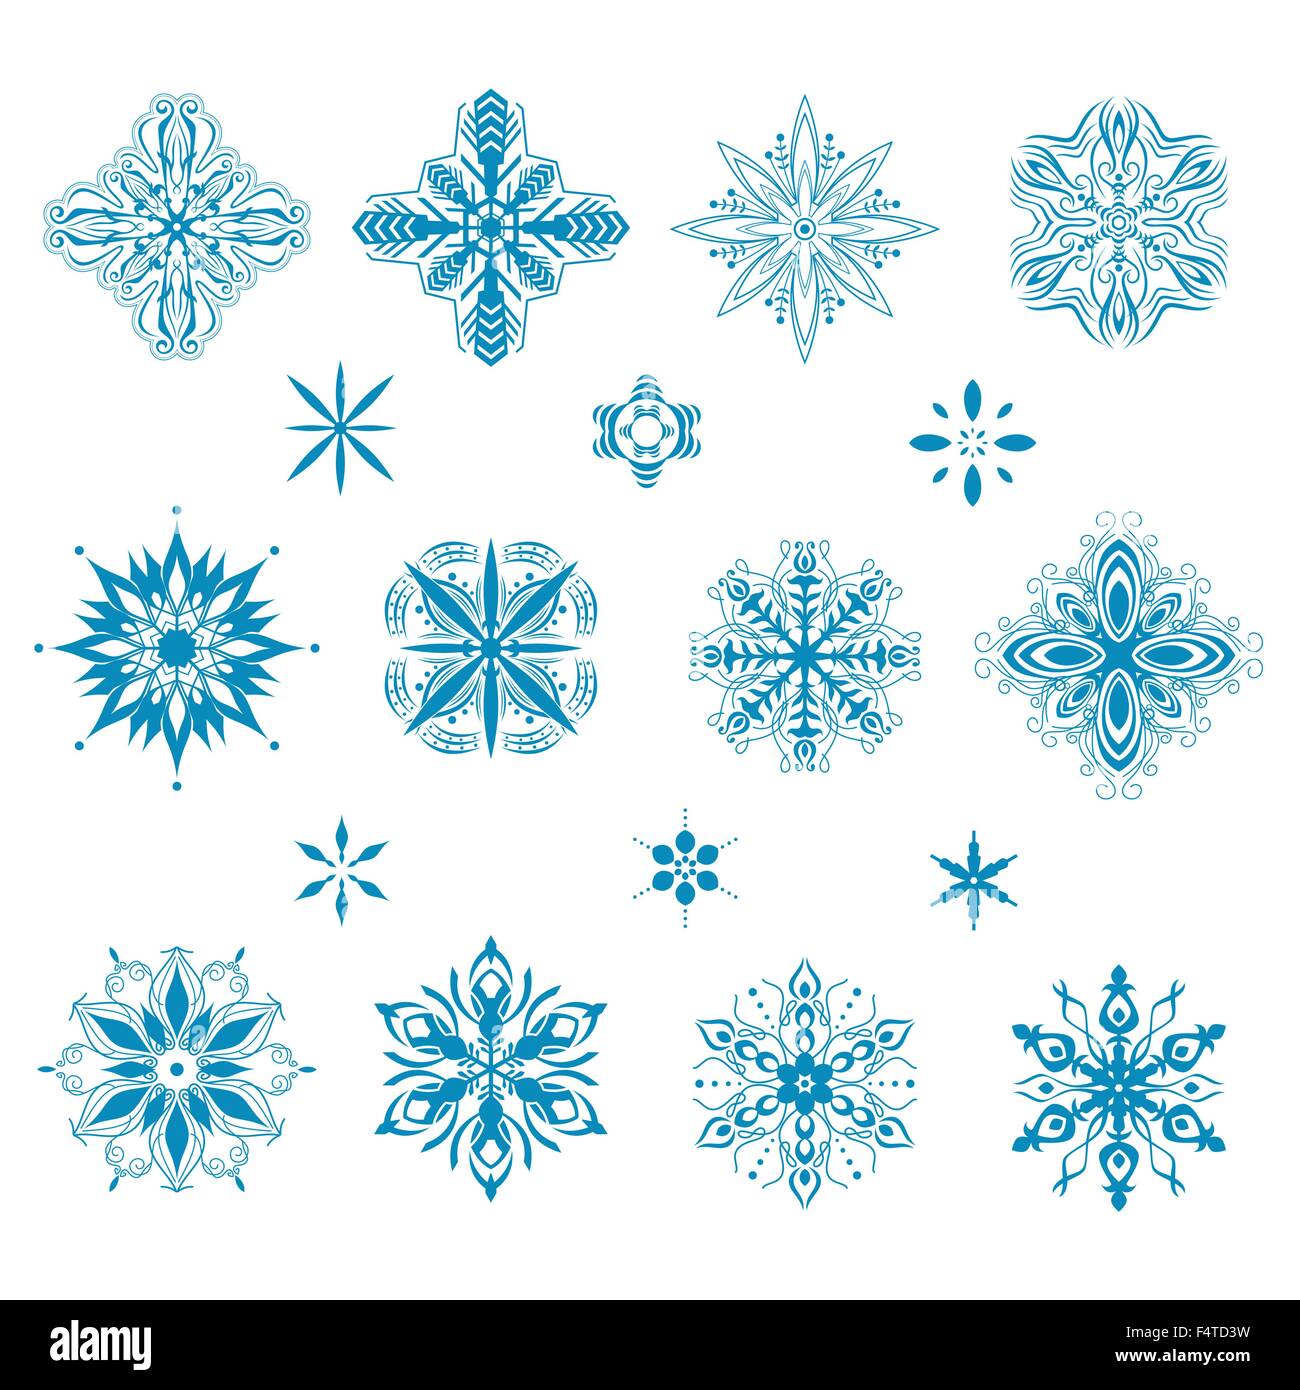 A vector illustration of snow icon designs Stock Vector